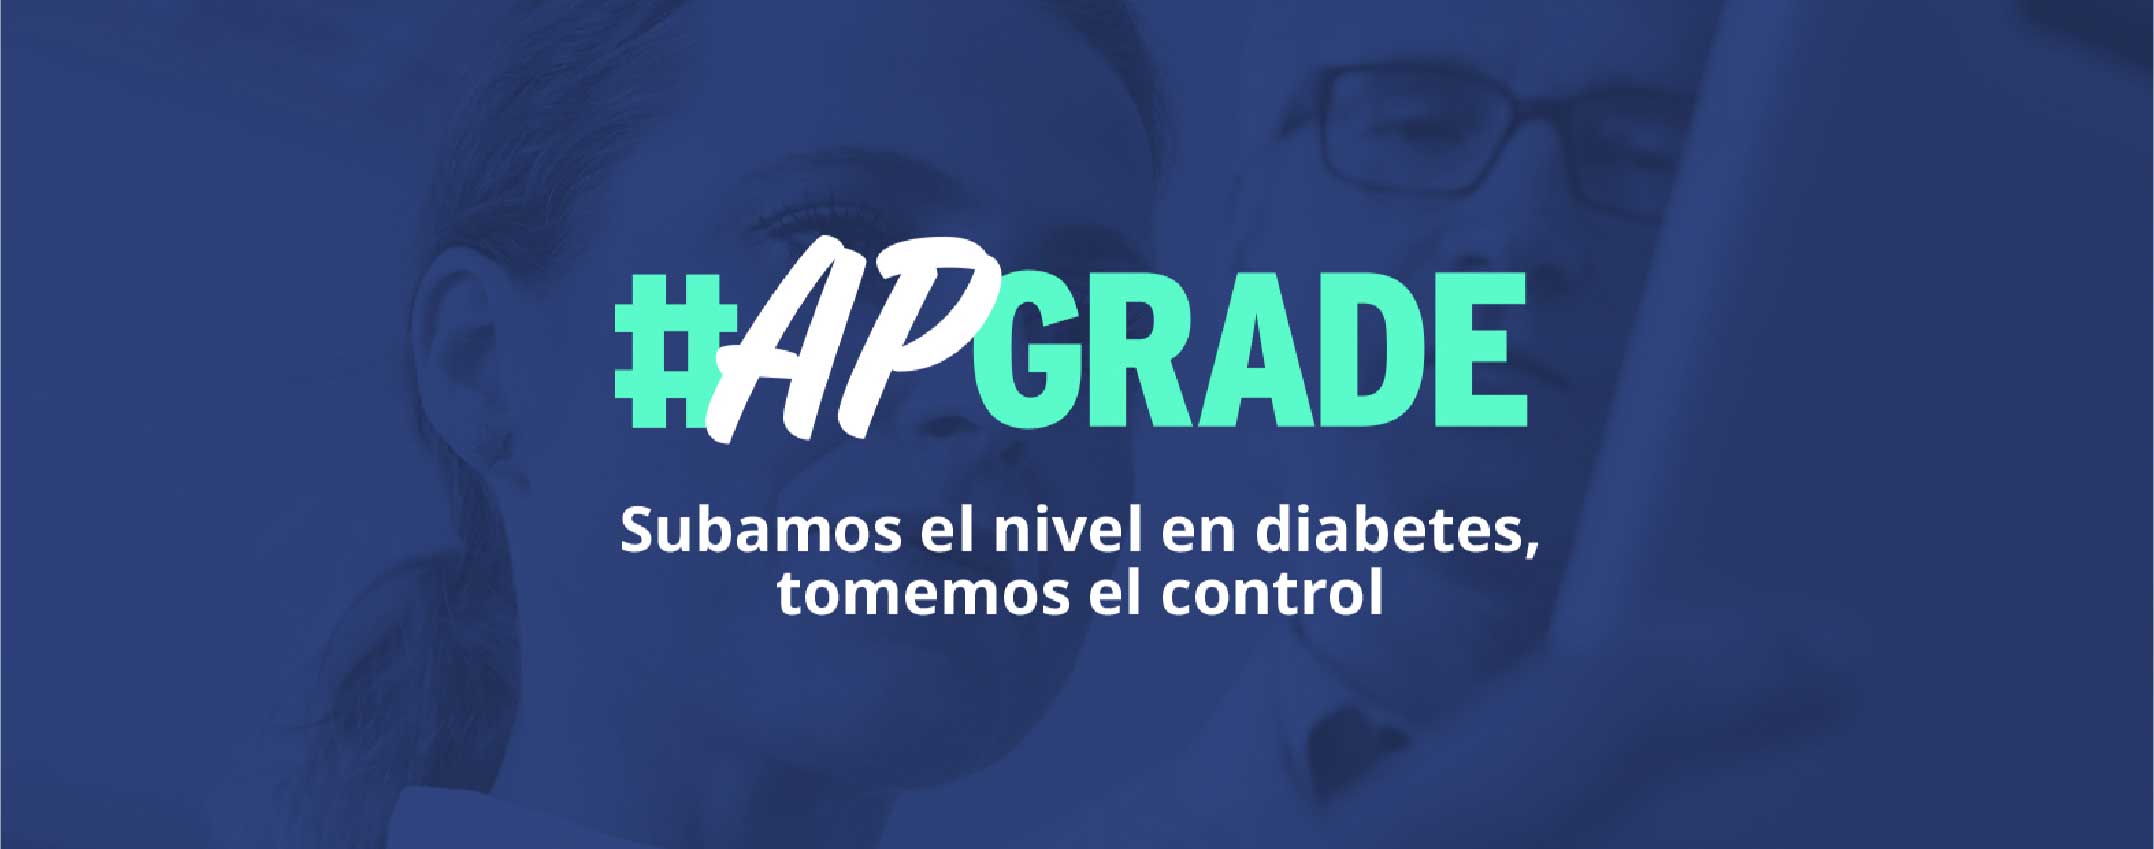 Apgrade-breaking-diabetes-banner